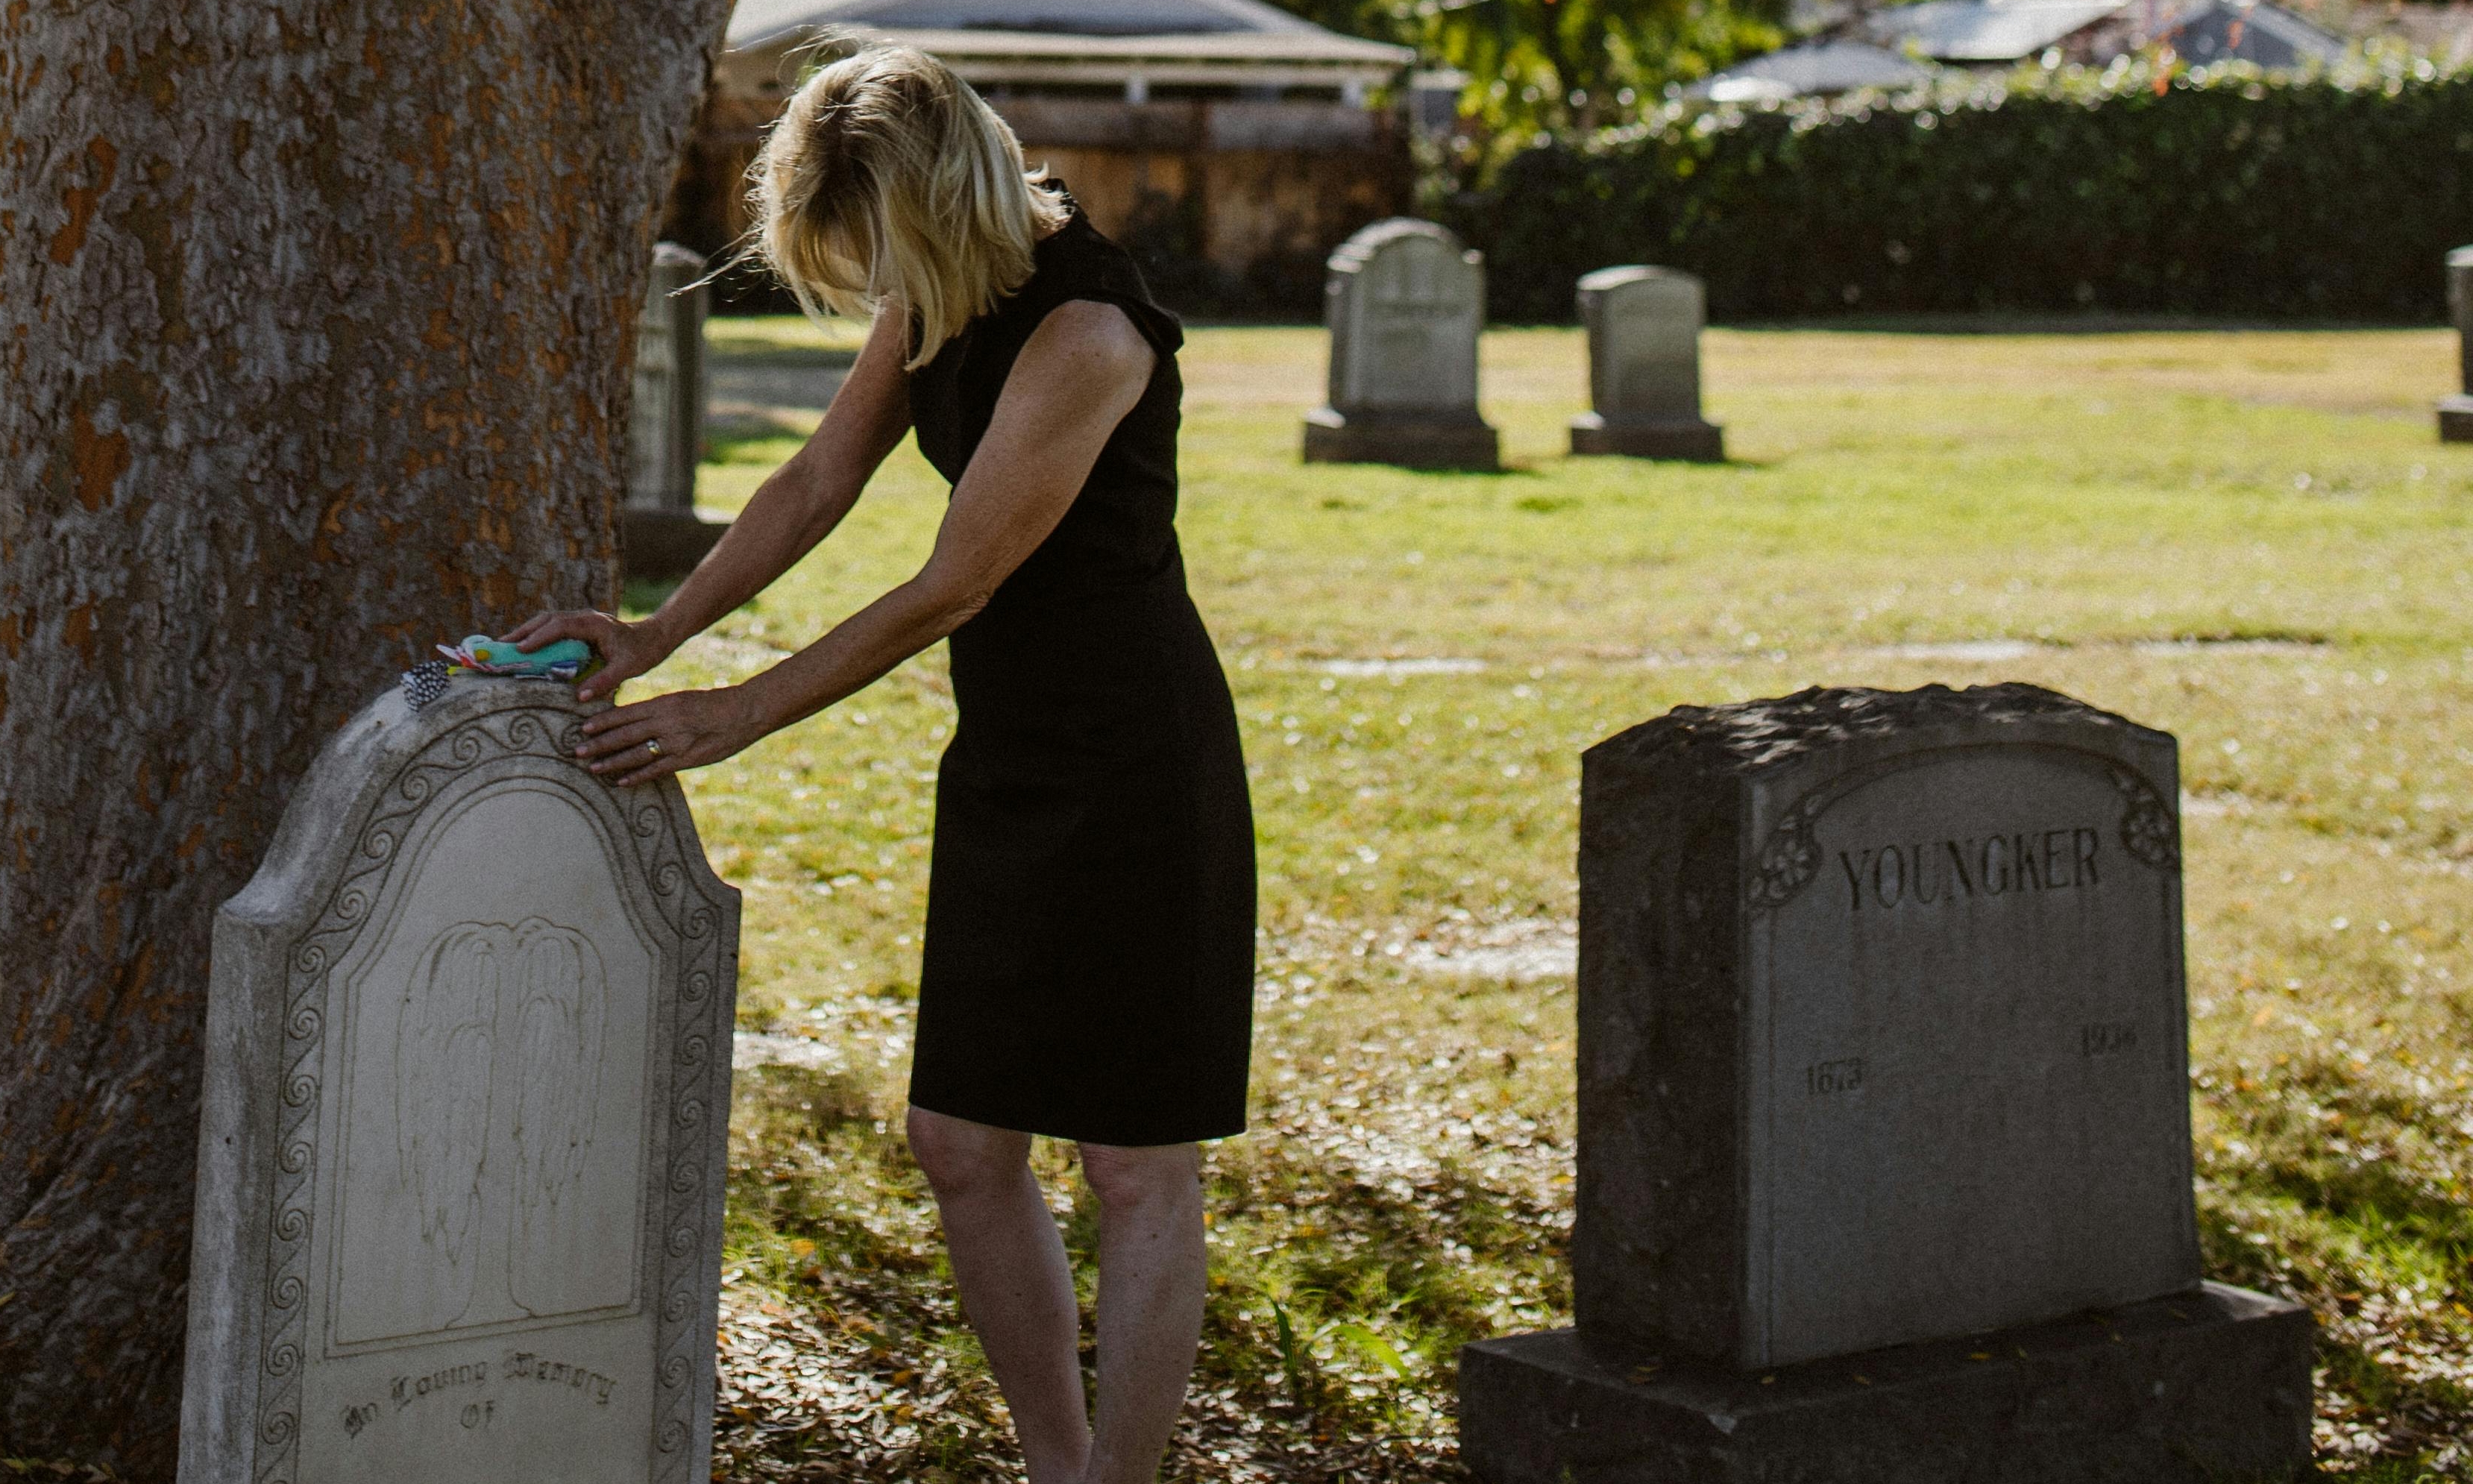 A woman visiting a gravesite | Source: Pexels